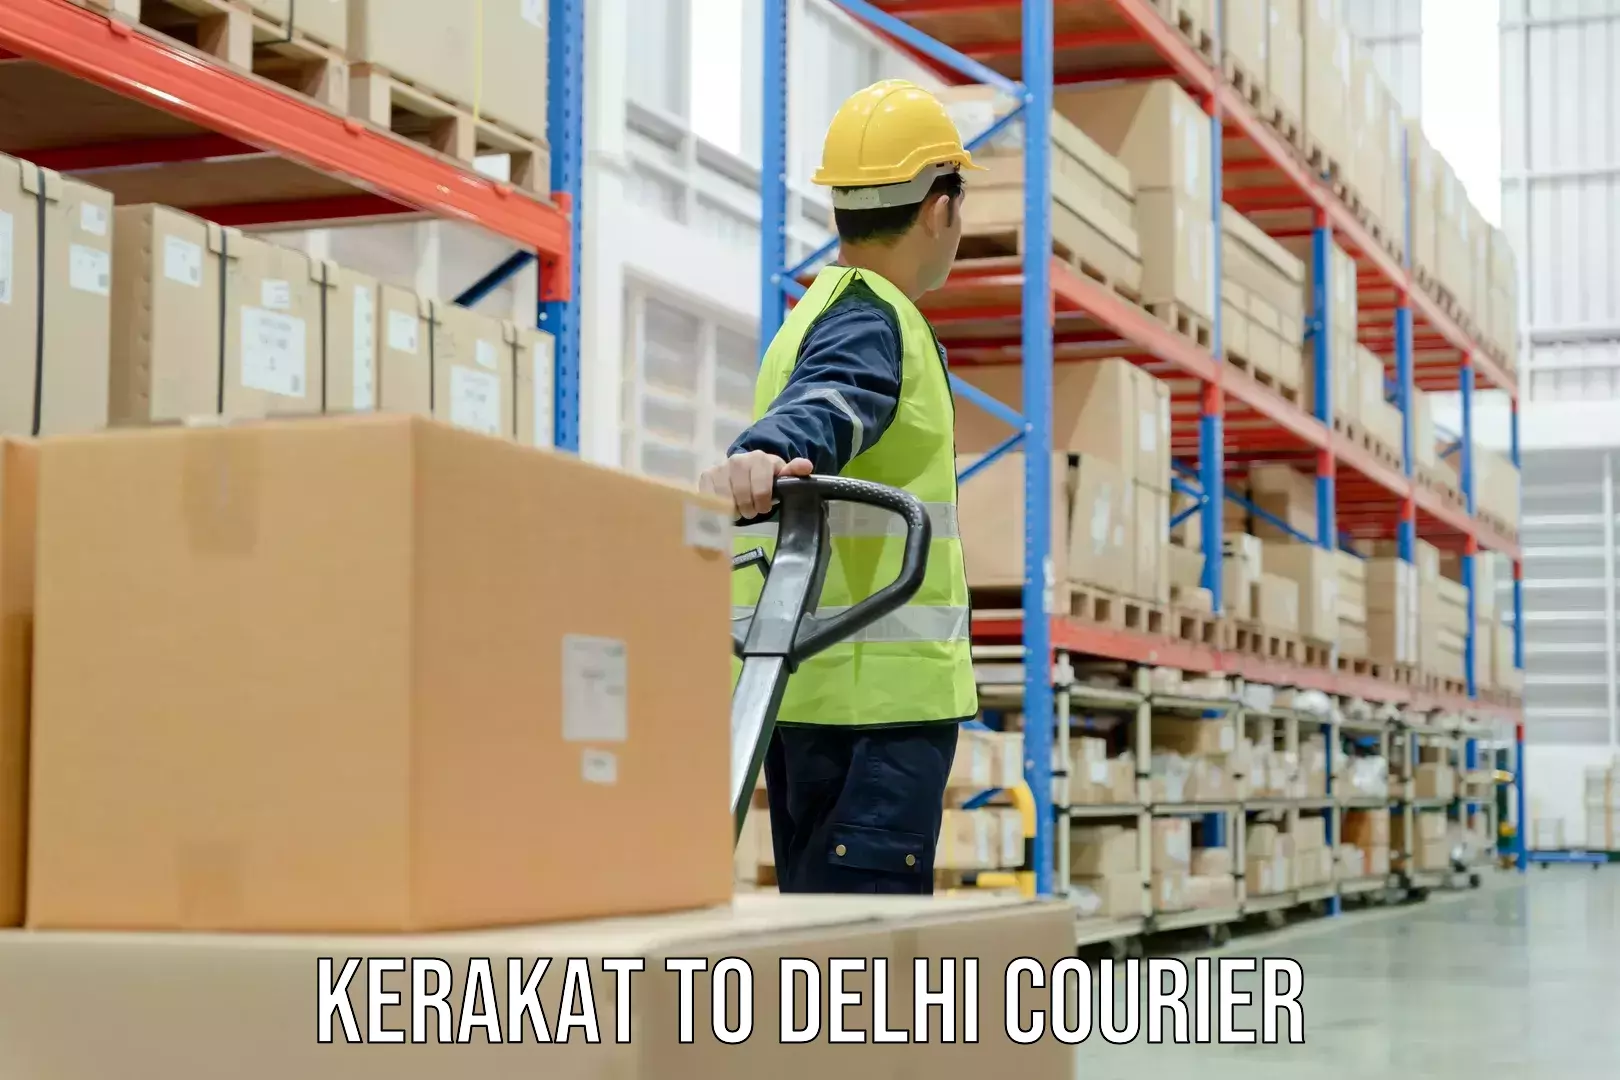 Subscription-based courier Kerakat to Delhi